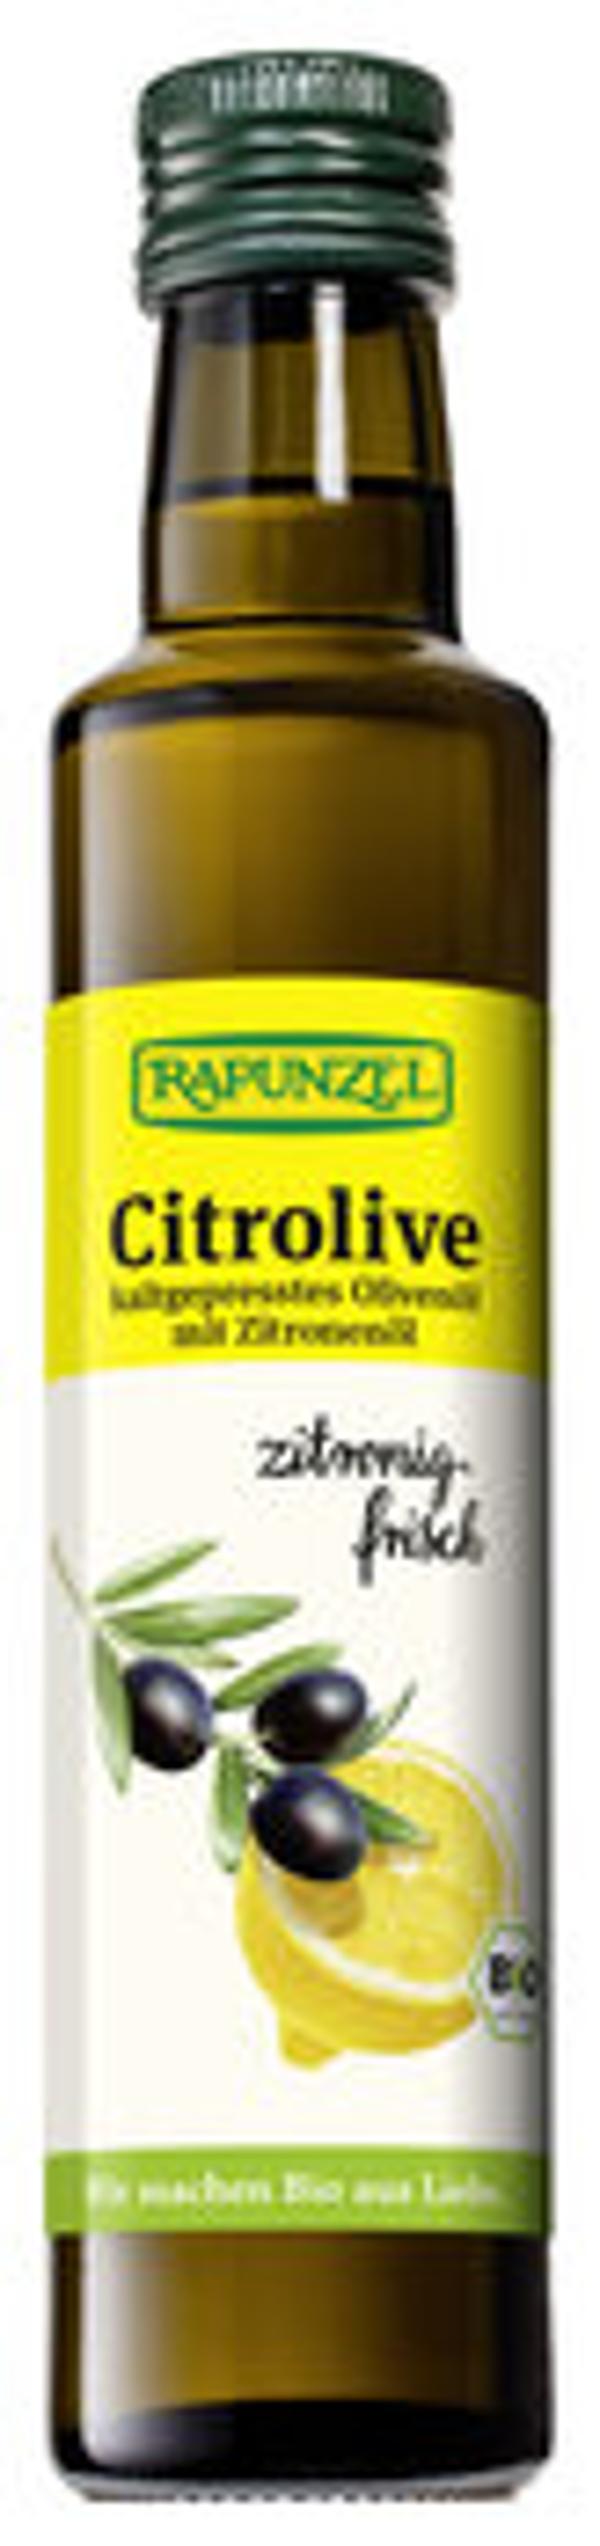 Produktfoto zu Citrolive, 250 ml